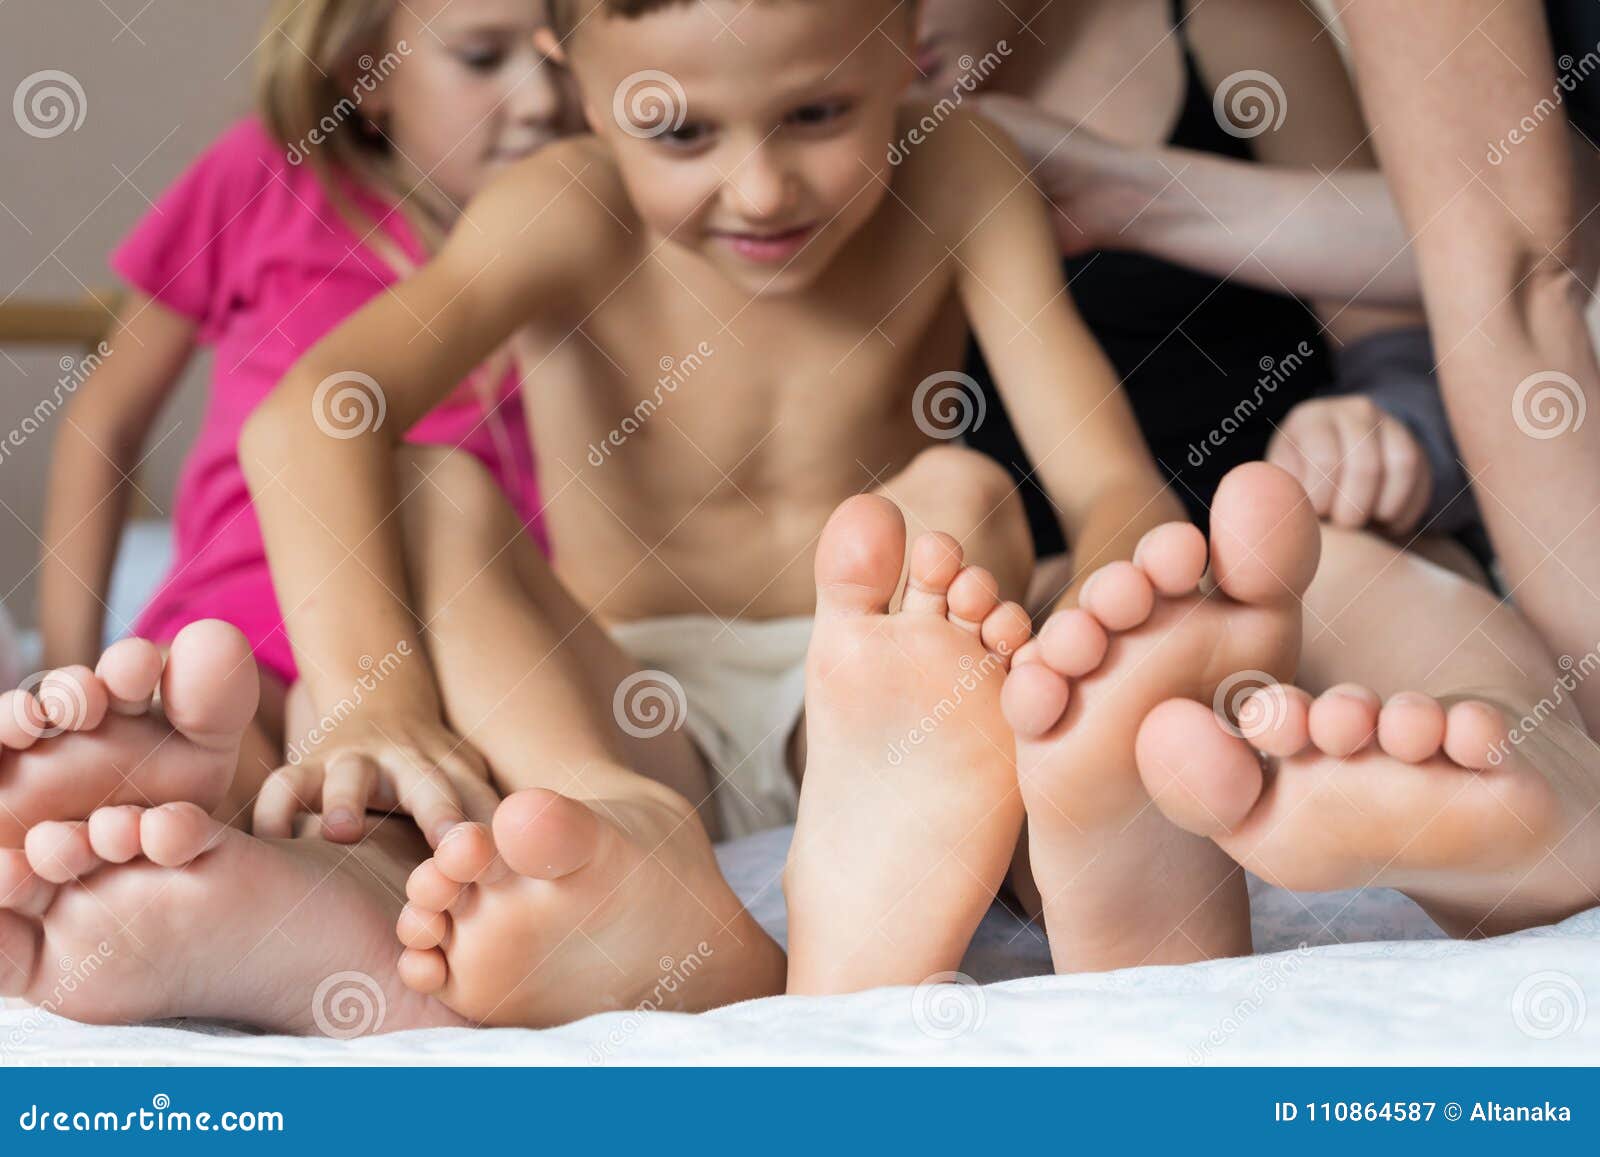 Boys licking foot. Feet дети. Детский licking foot. Дети feet lick. Сестренка ступни.